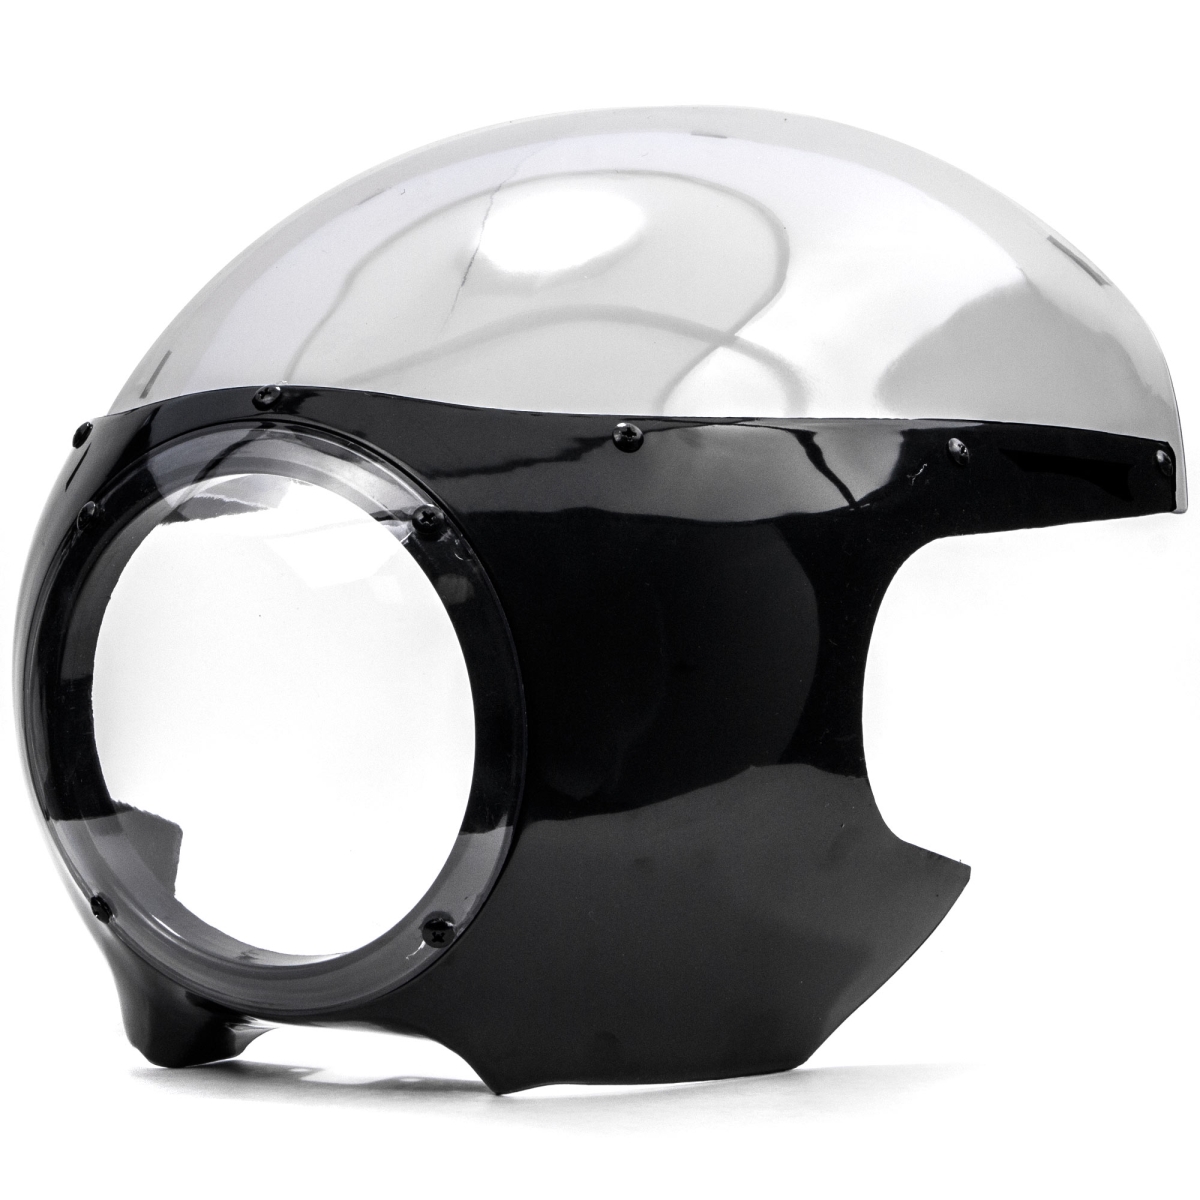 Jbm-6003-1 5.75 In. Motorcycle Headlight Fairing Screen Retro Cafe Racer Drag, Black & Clear